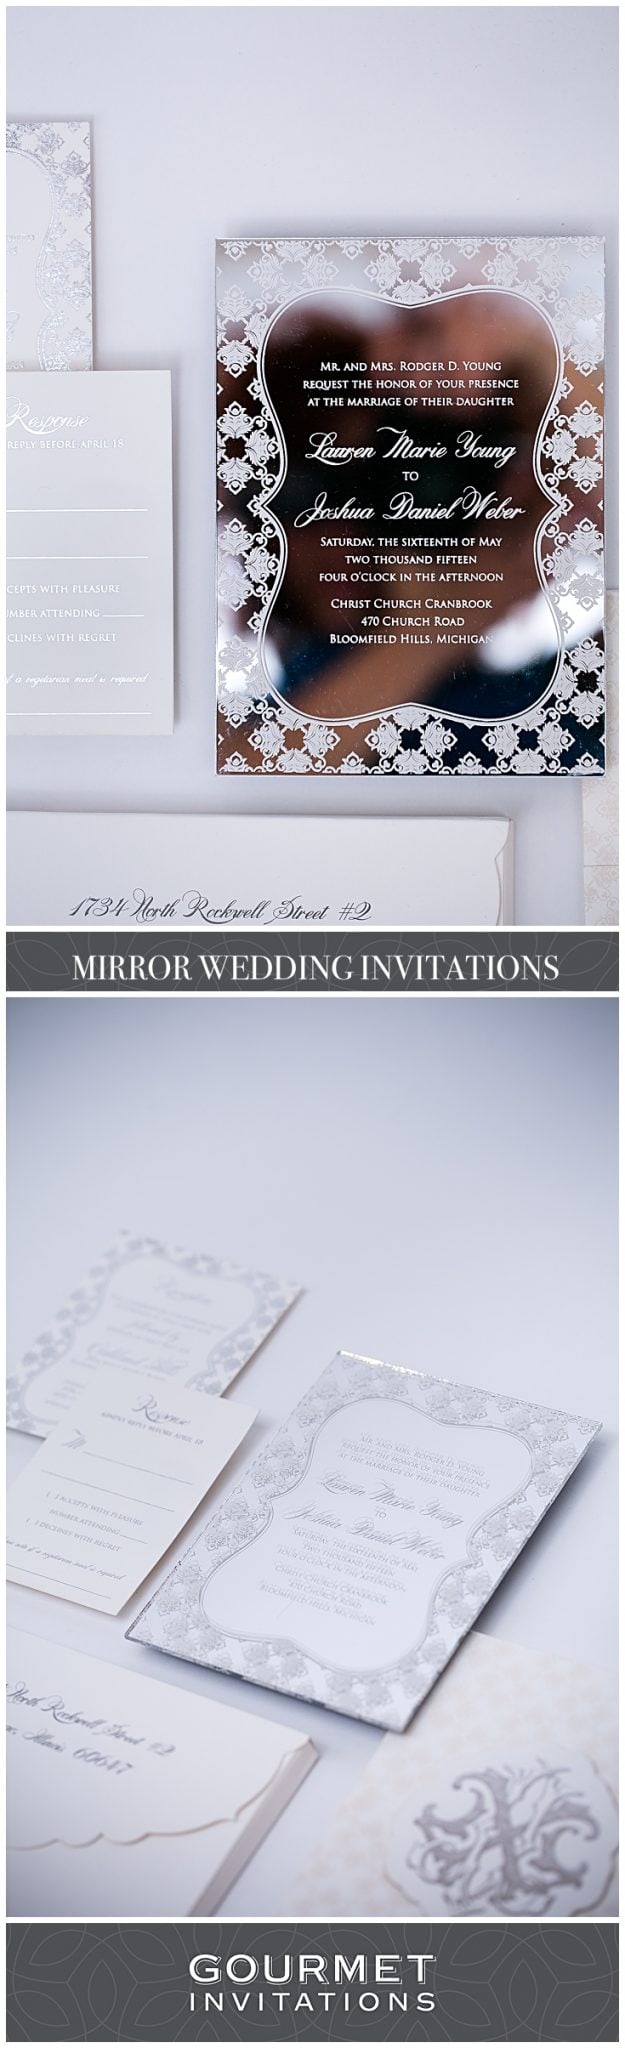 mirror-wedding-invitations_0002